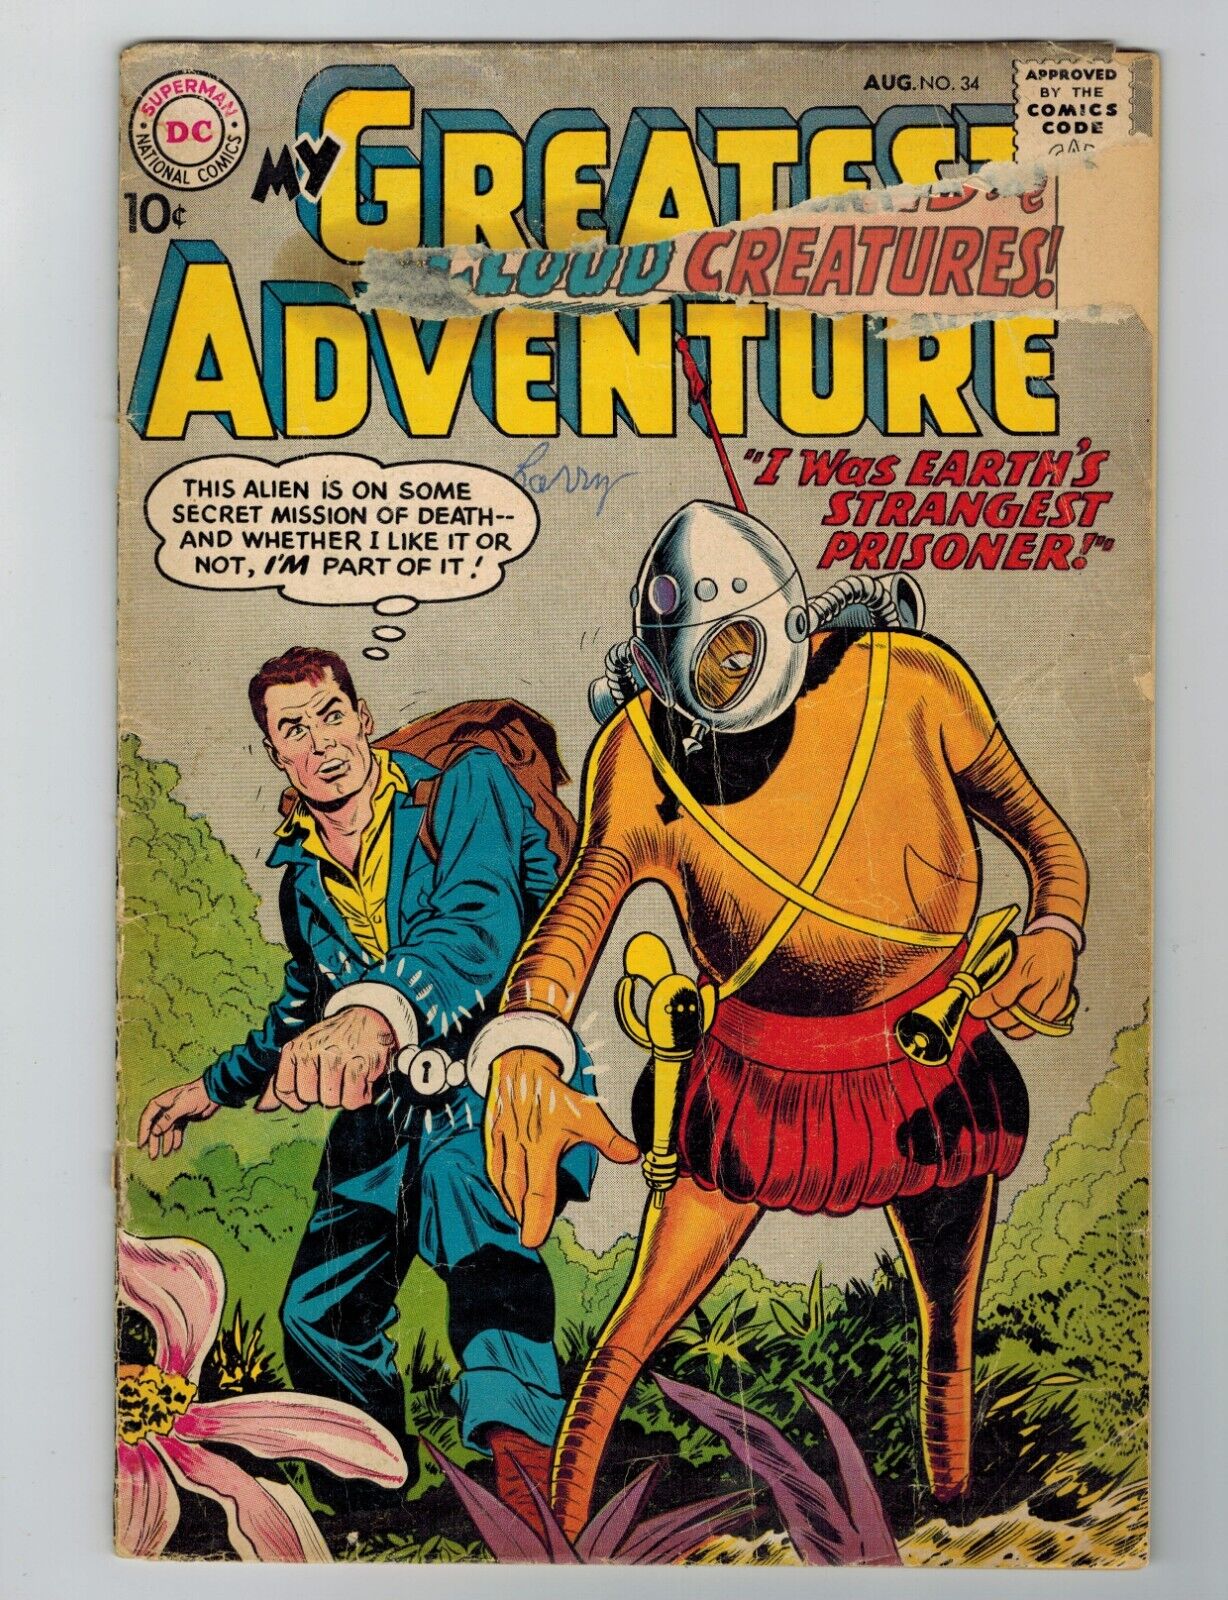 My Greatest Adventure #34 Comic Book August 1959 DC Comics